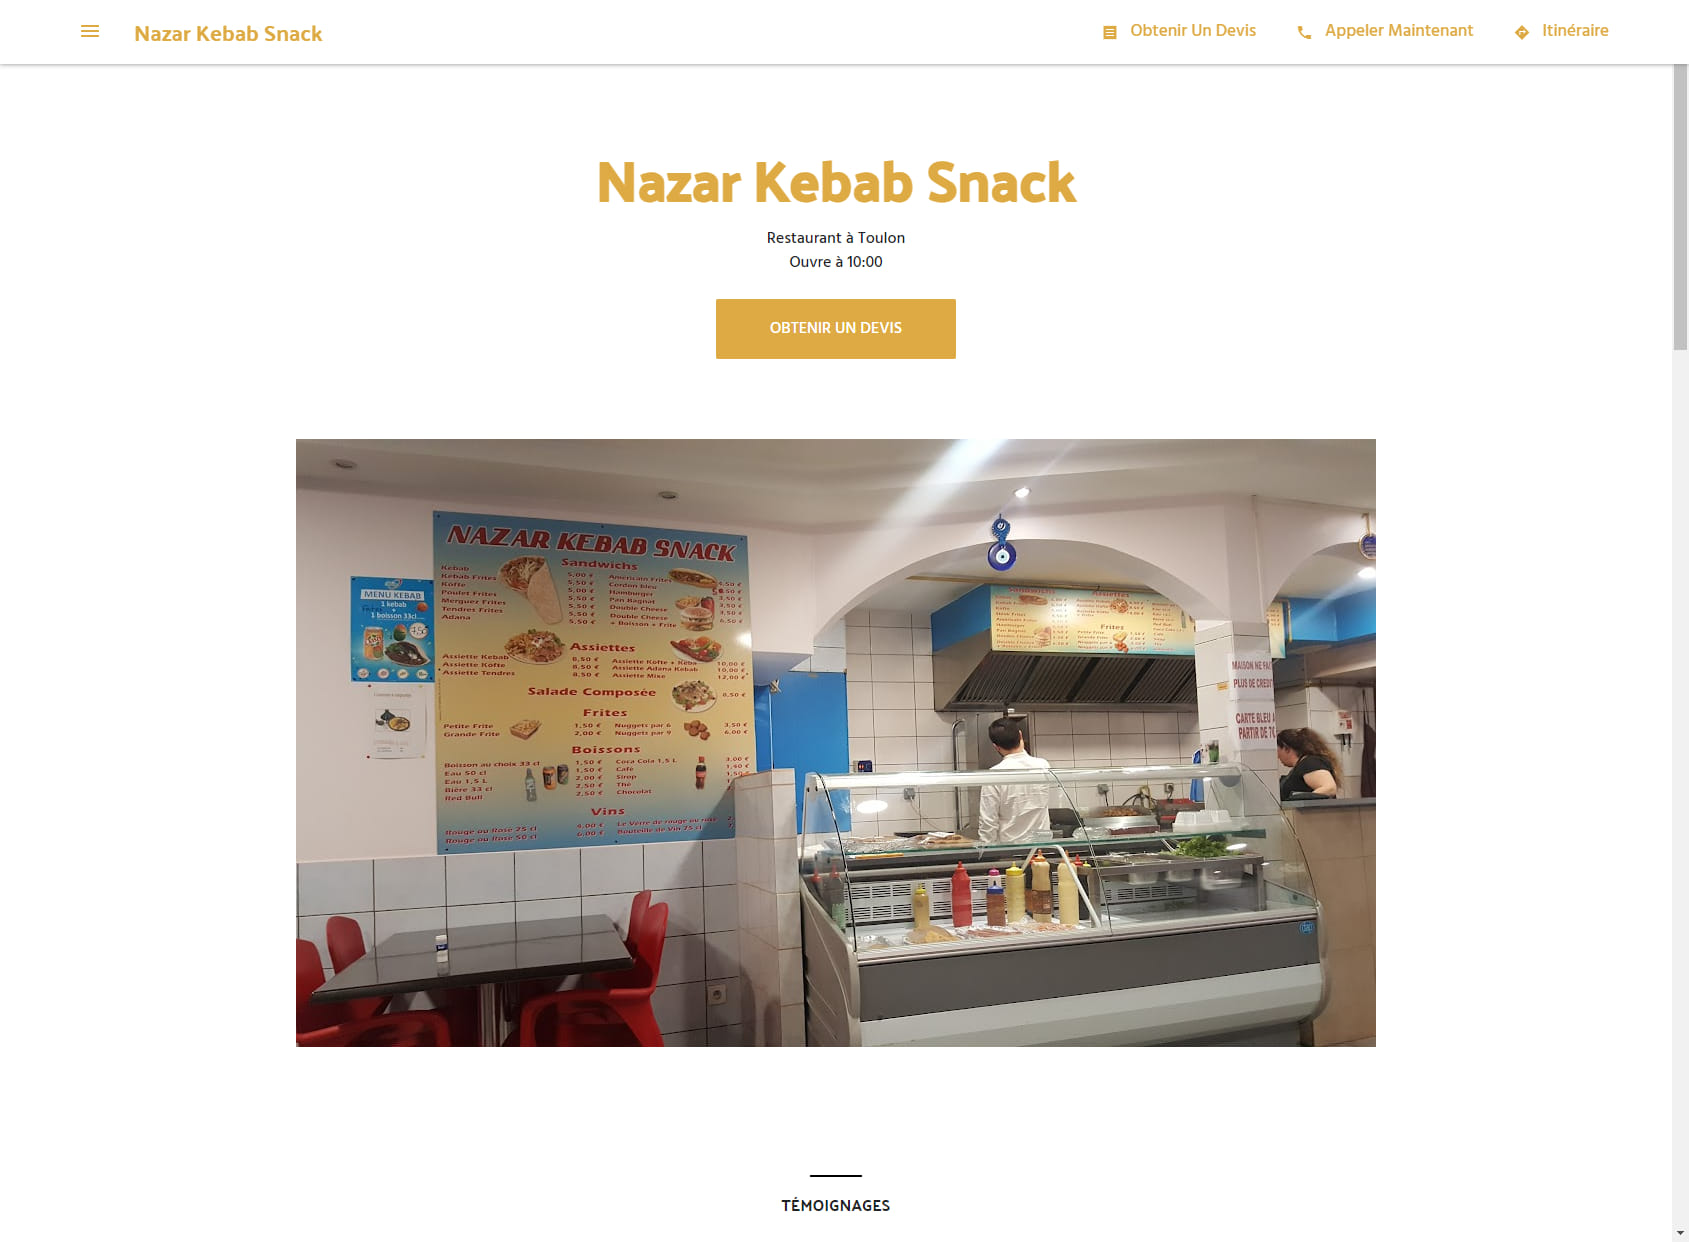 Nazar Kebab Snack